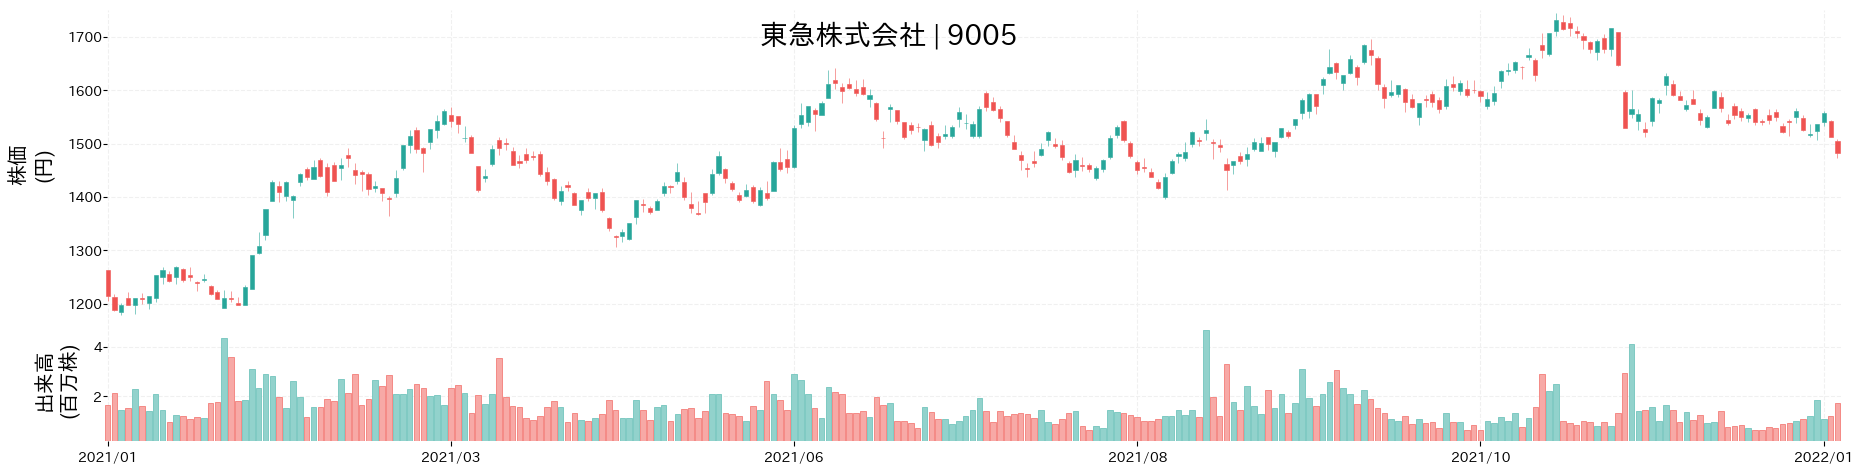 東急の株価推移(2021)